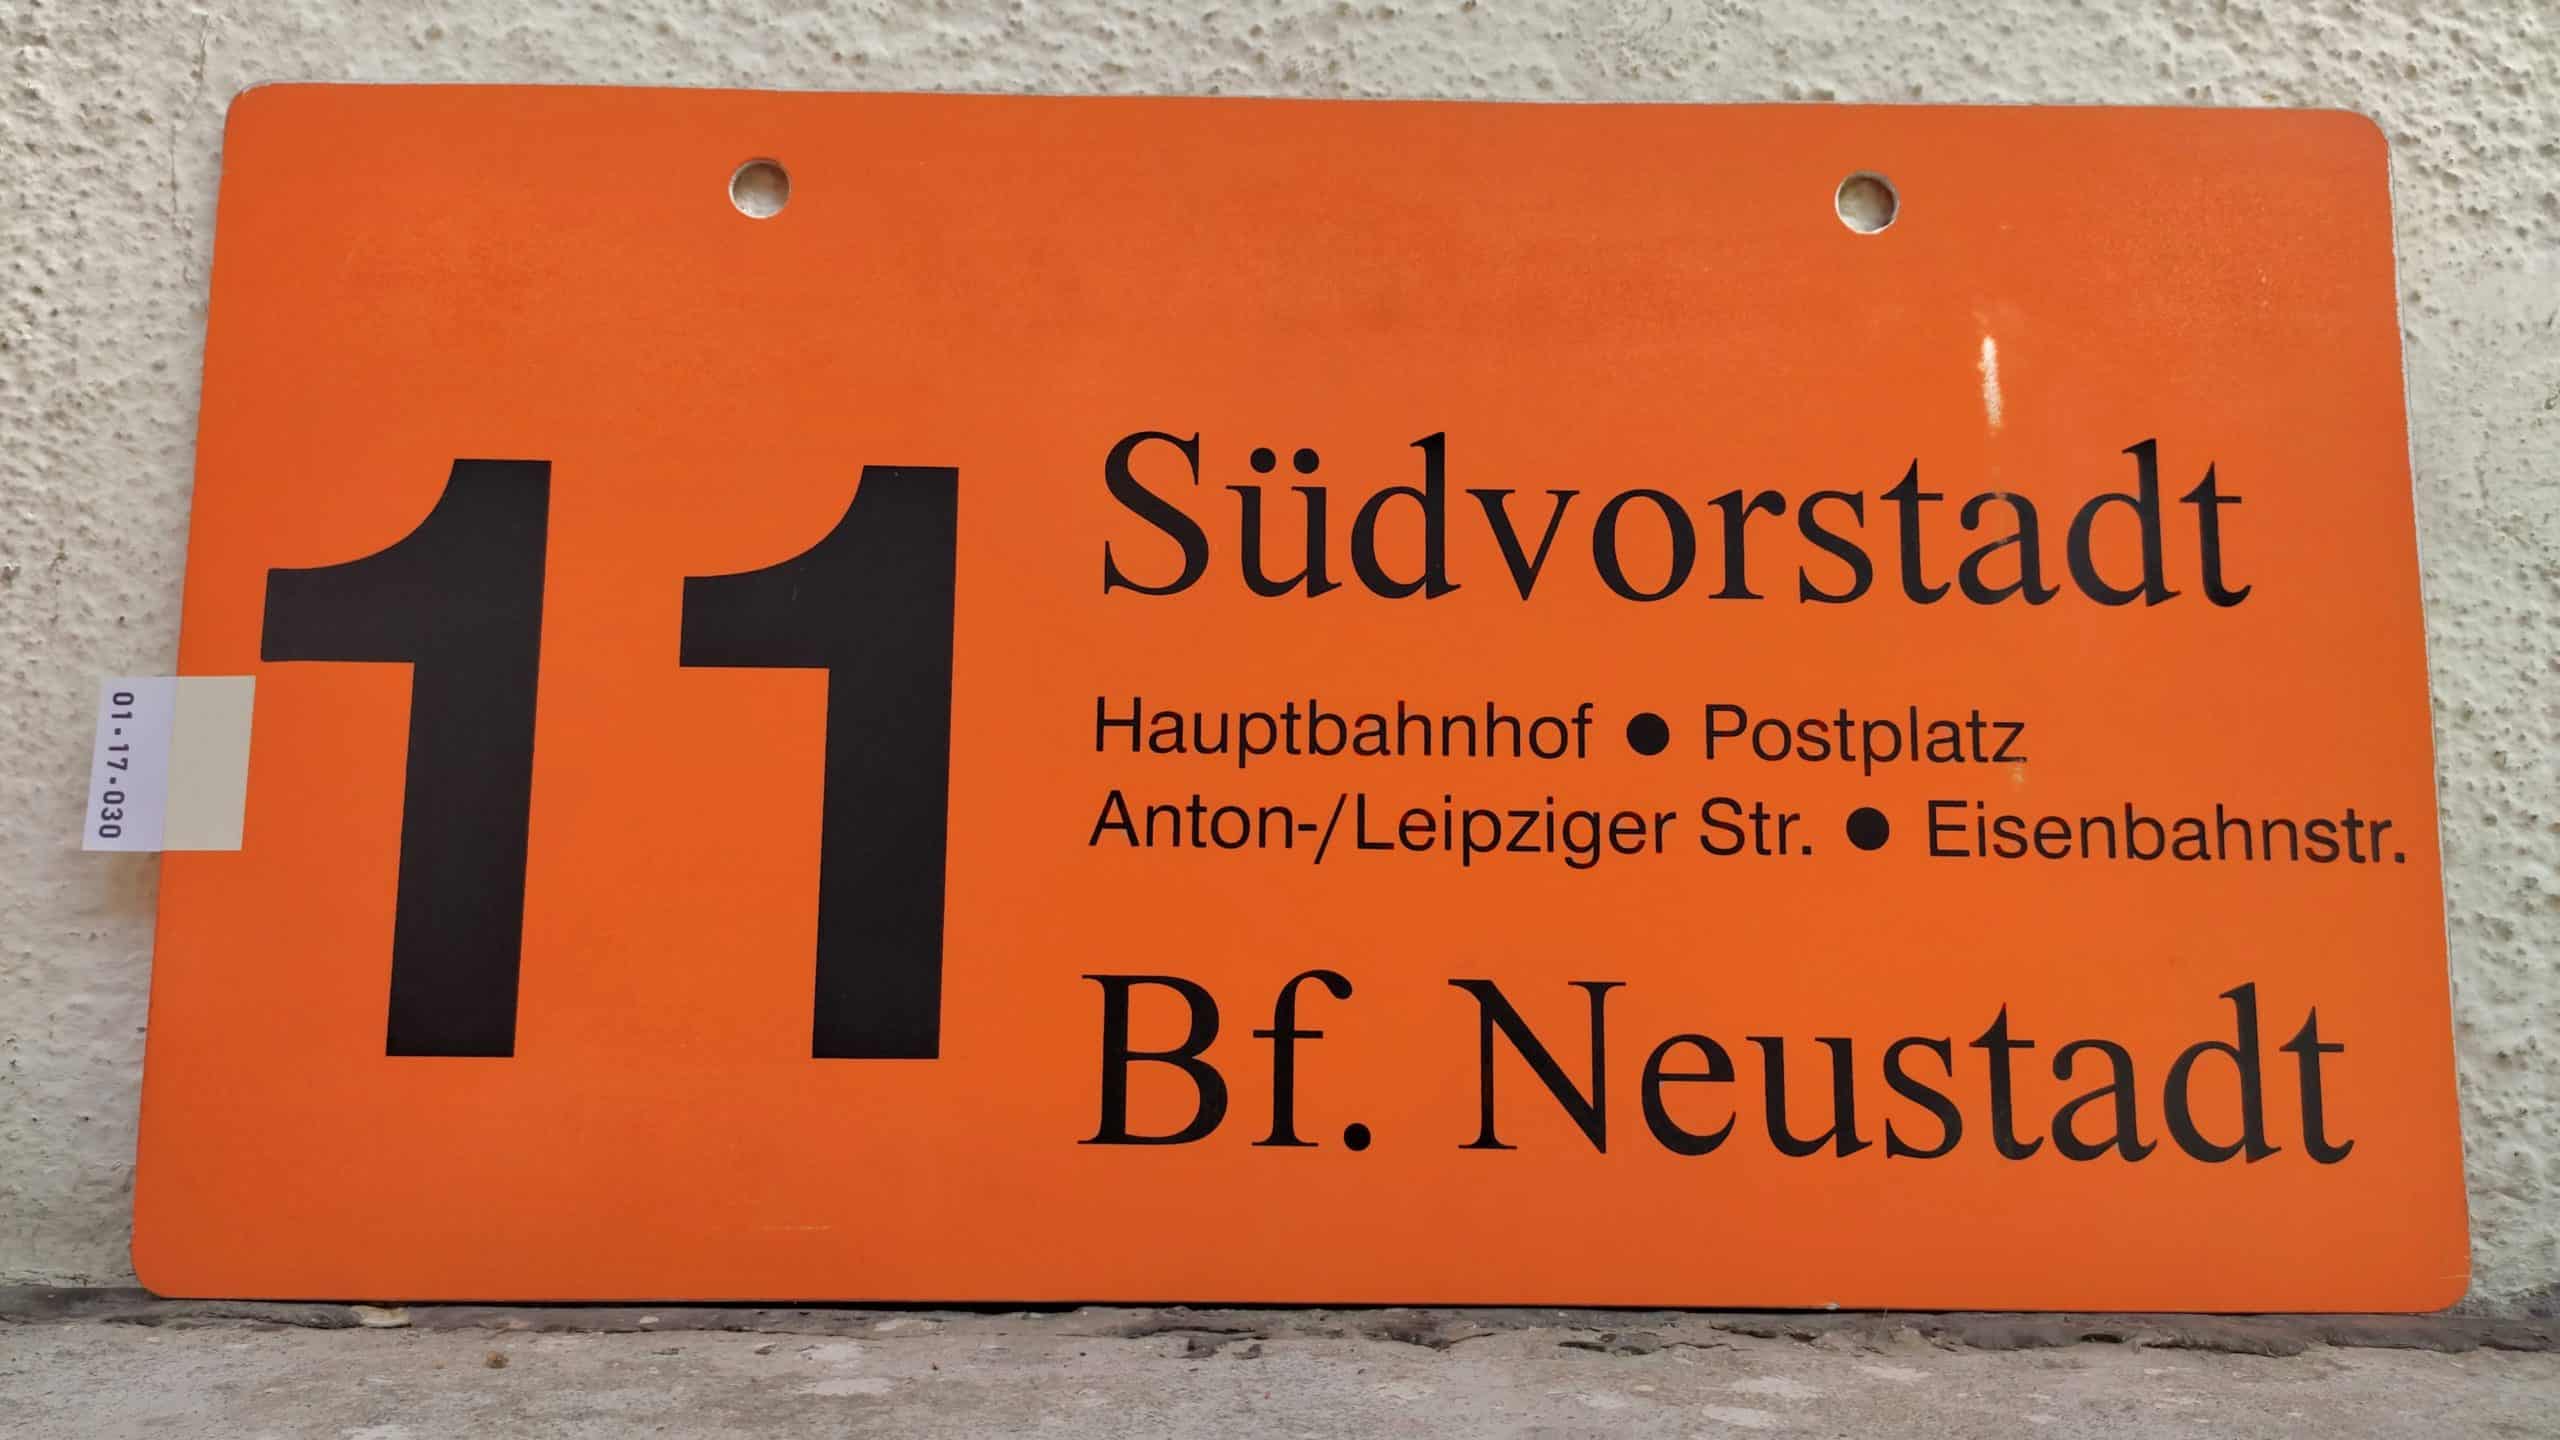 11 Südvorstadt – Bf. Neustadt #1